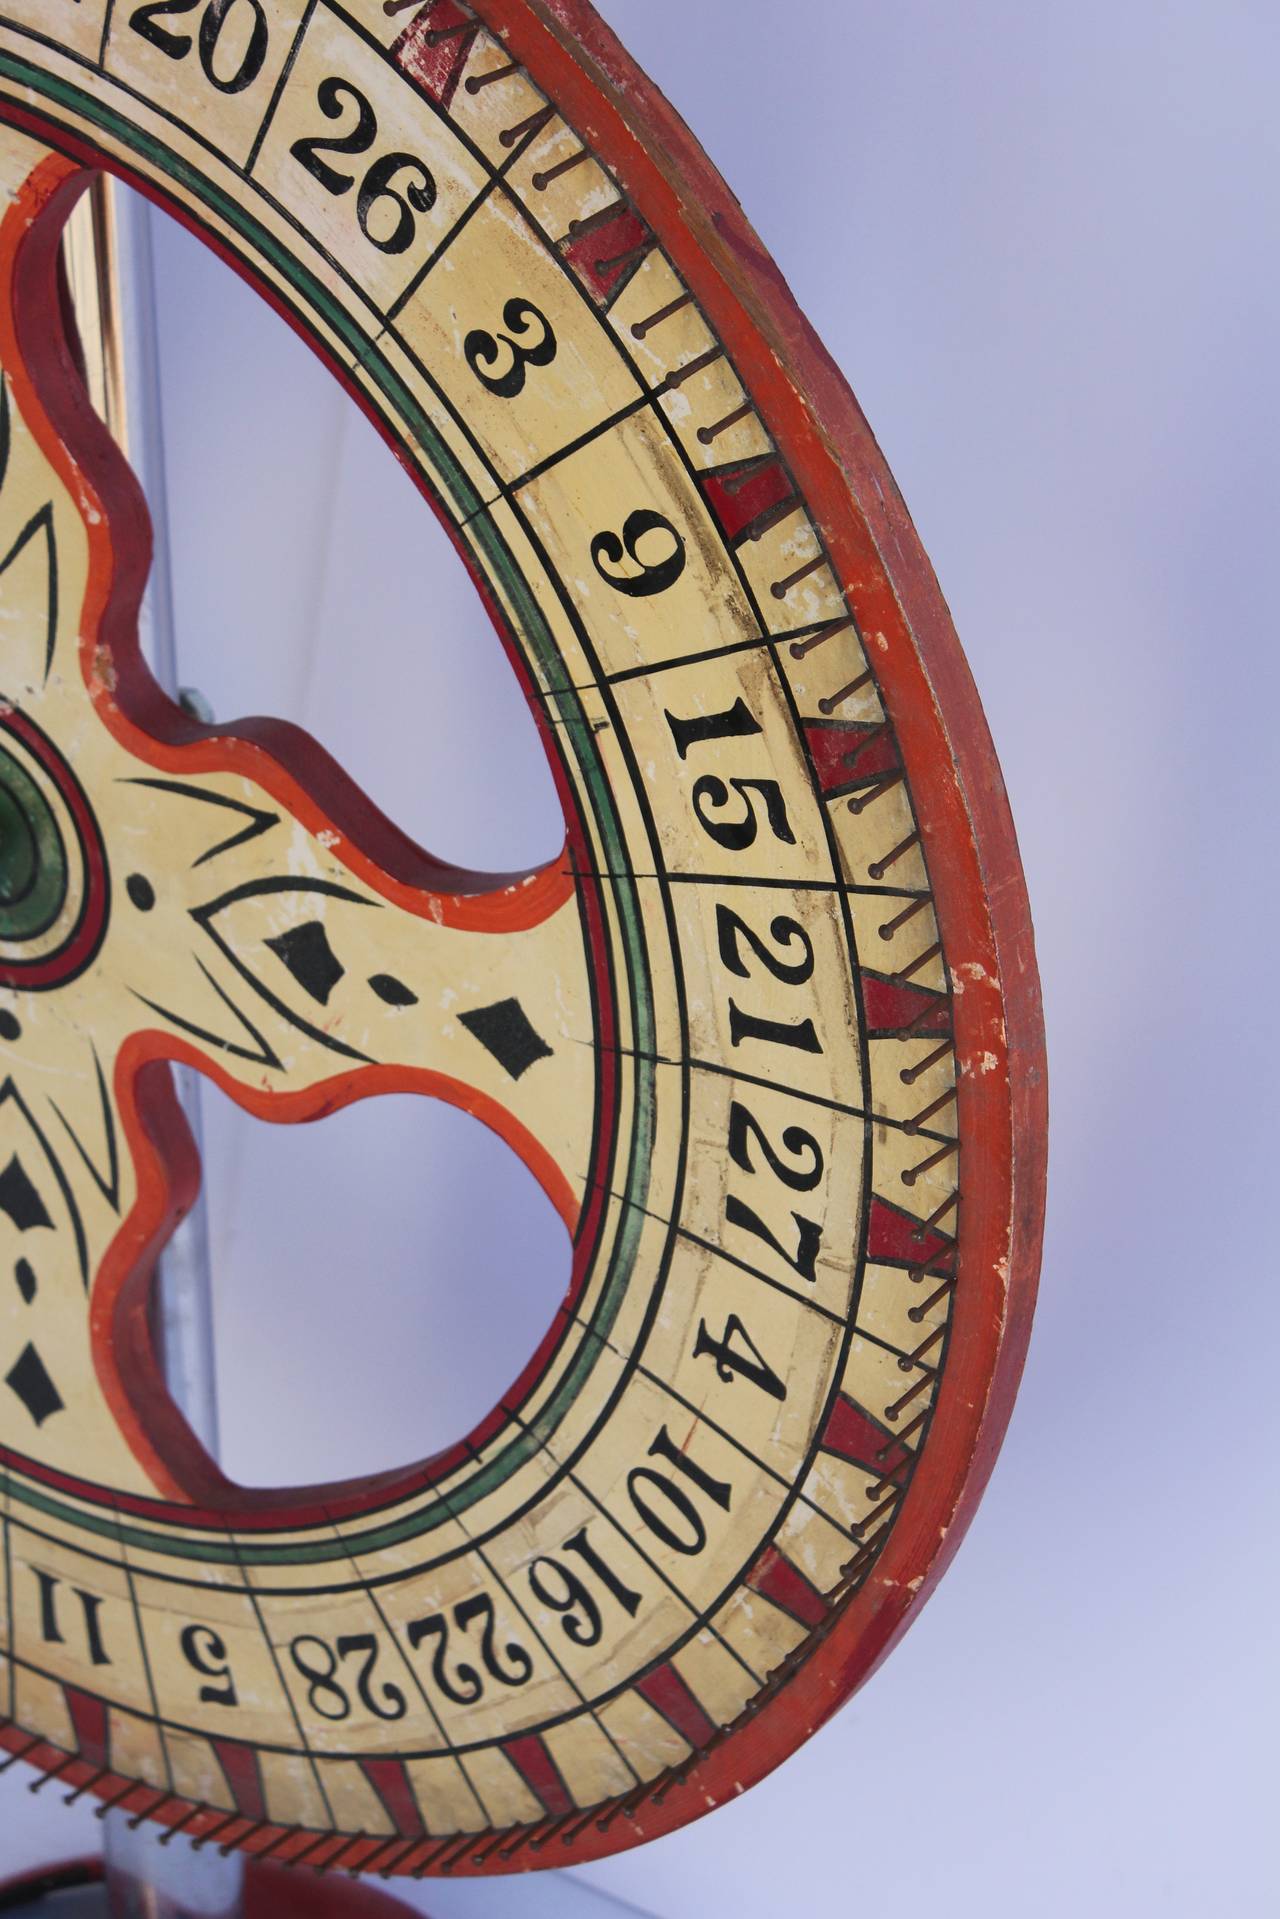 vintage carnival wheel